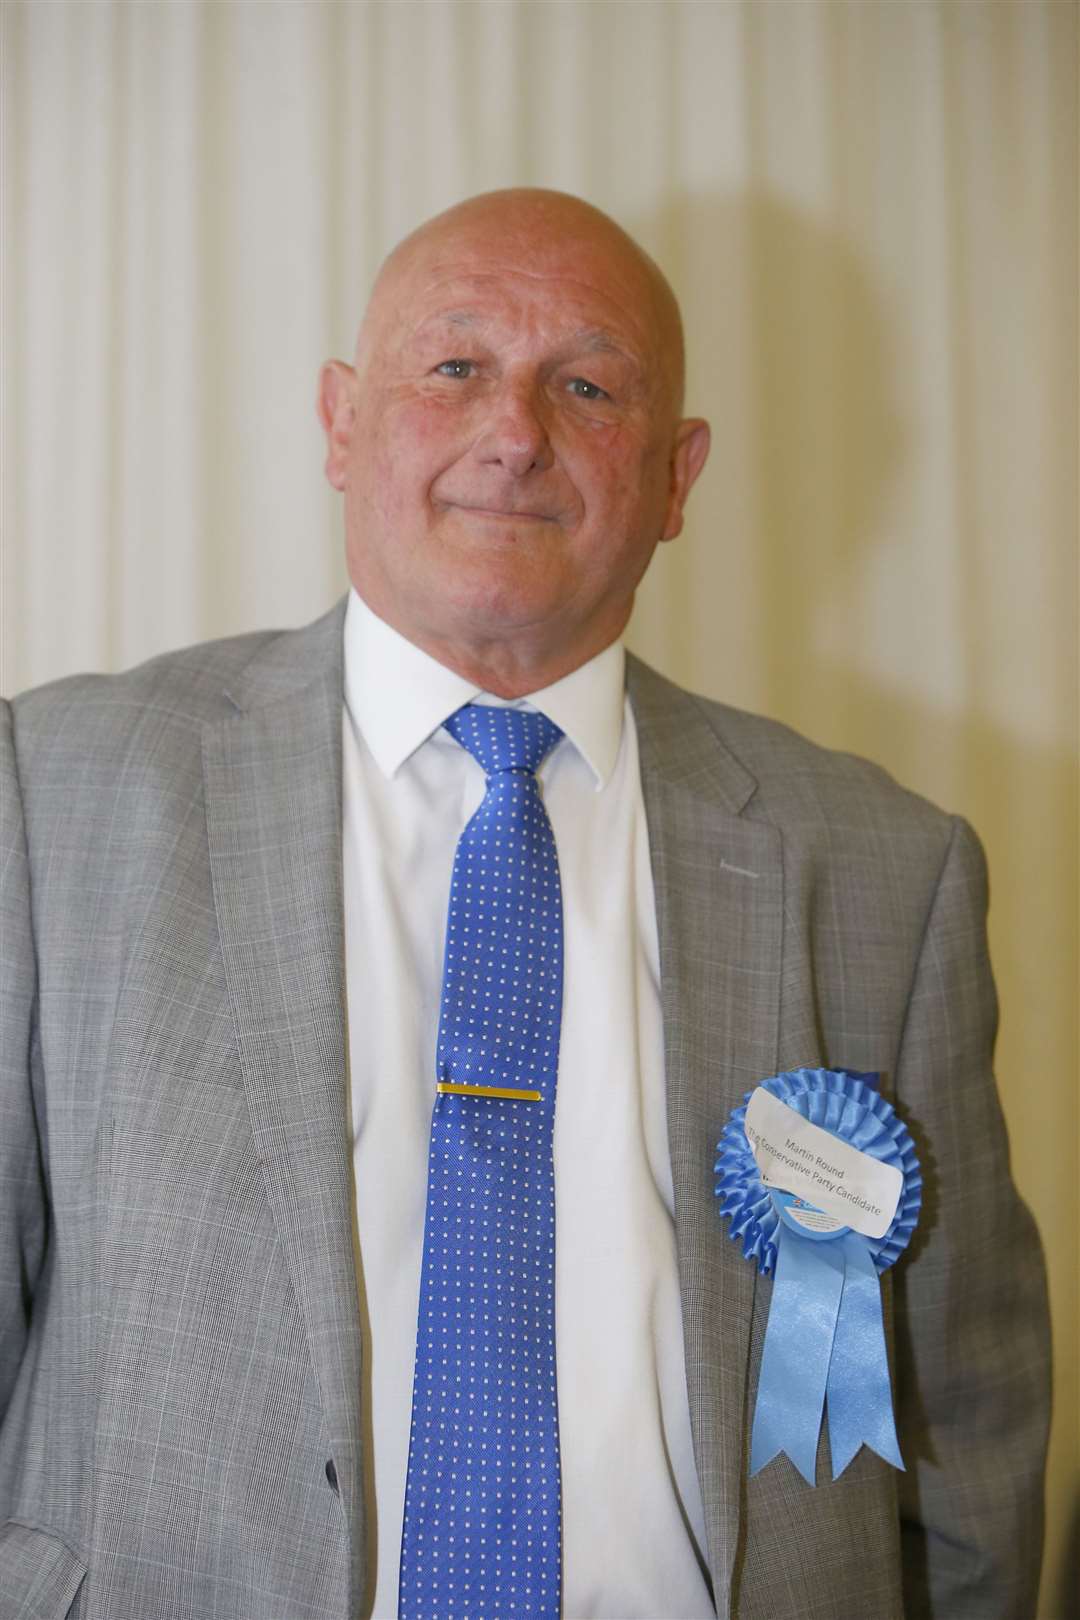 Maidstone borough councillor Martin Round. Picture: Andy Jones